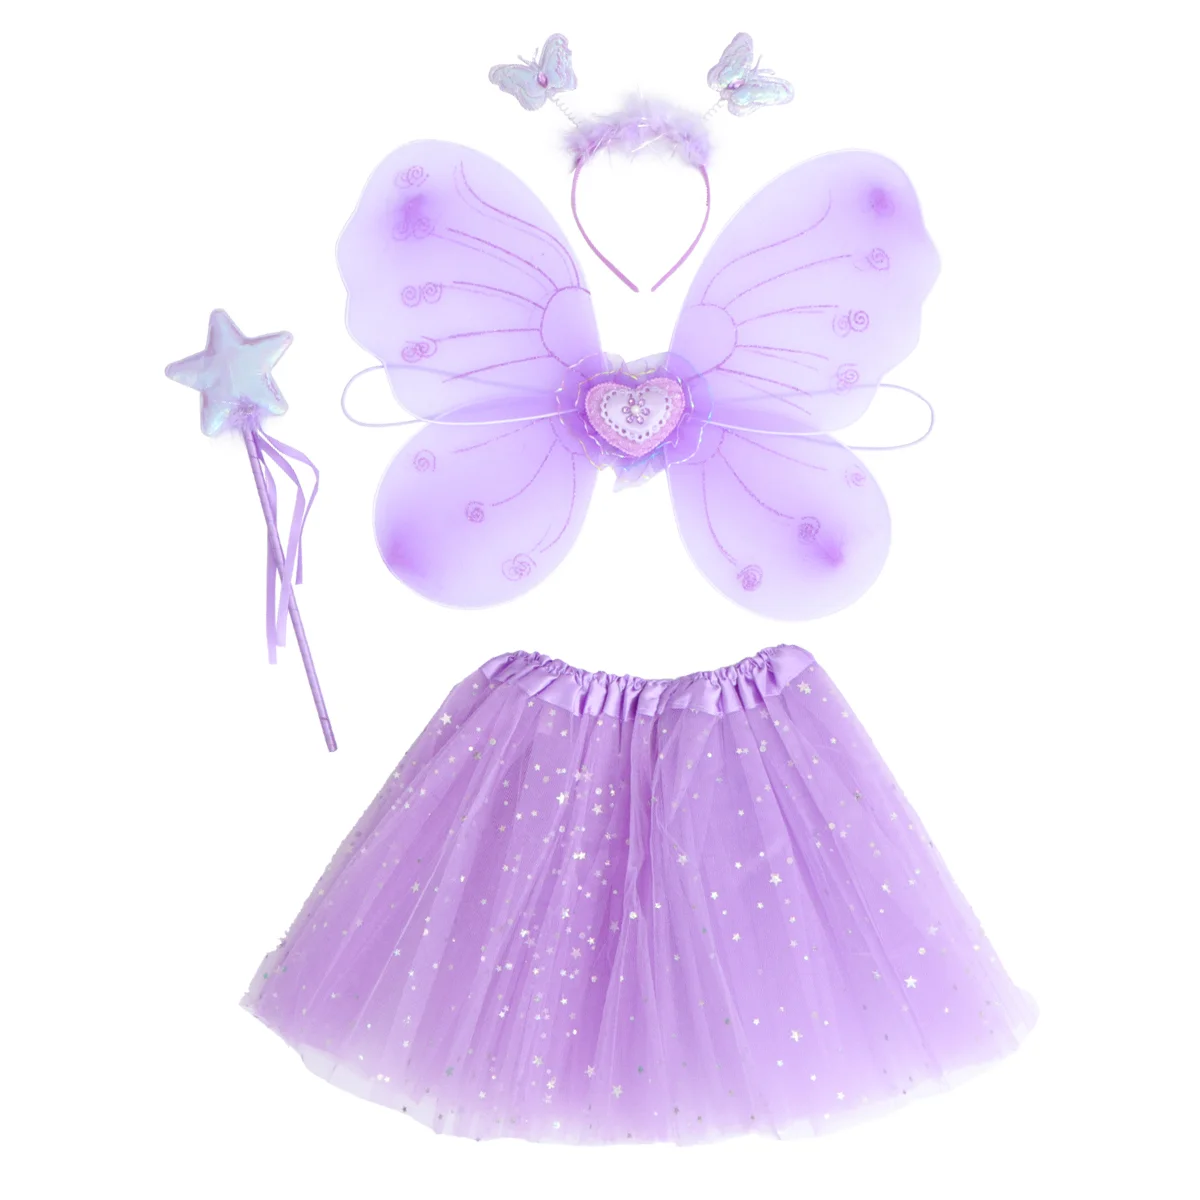 

Fairy Wings Dress Girls Costume Skirt Tutu Girl Cosplay Wand Kids Dresses S Costumes Adults Women Up Children Gauze 6 Years Old